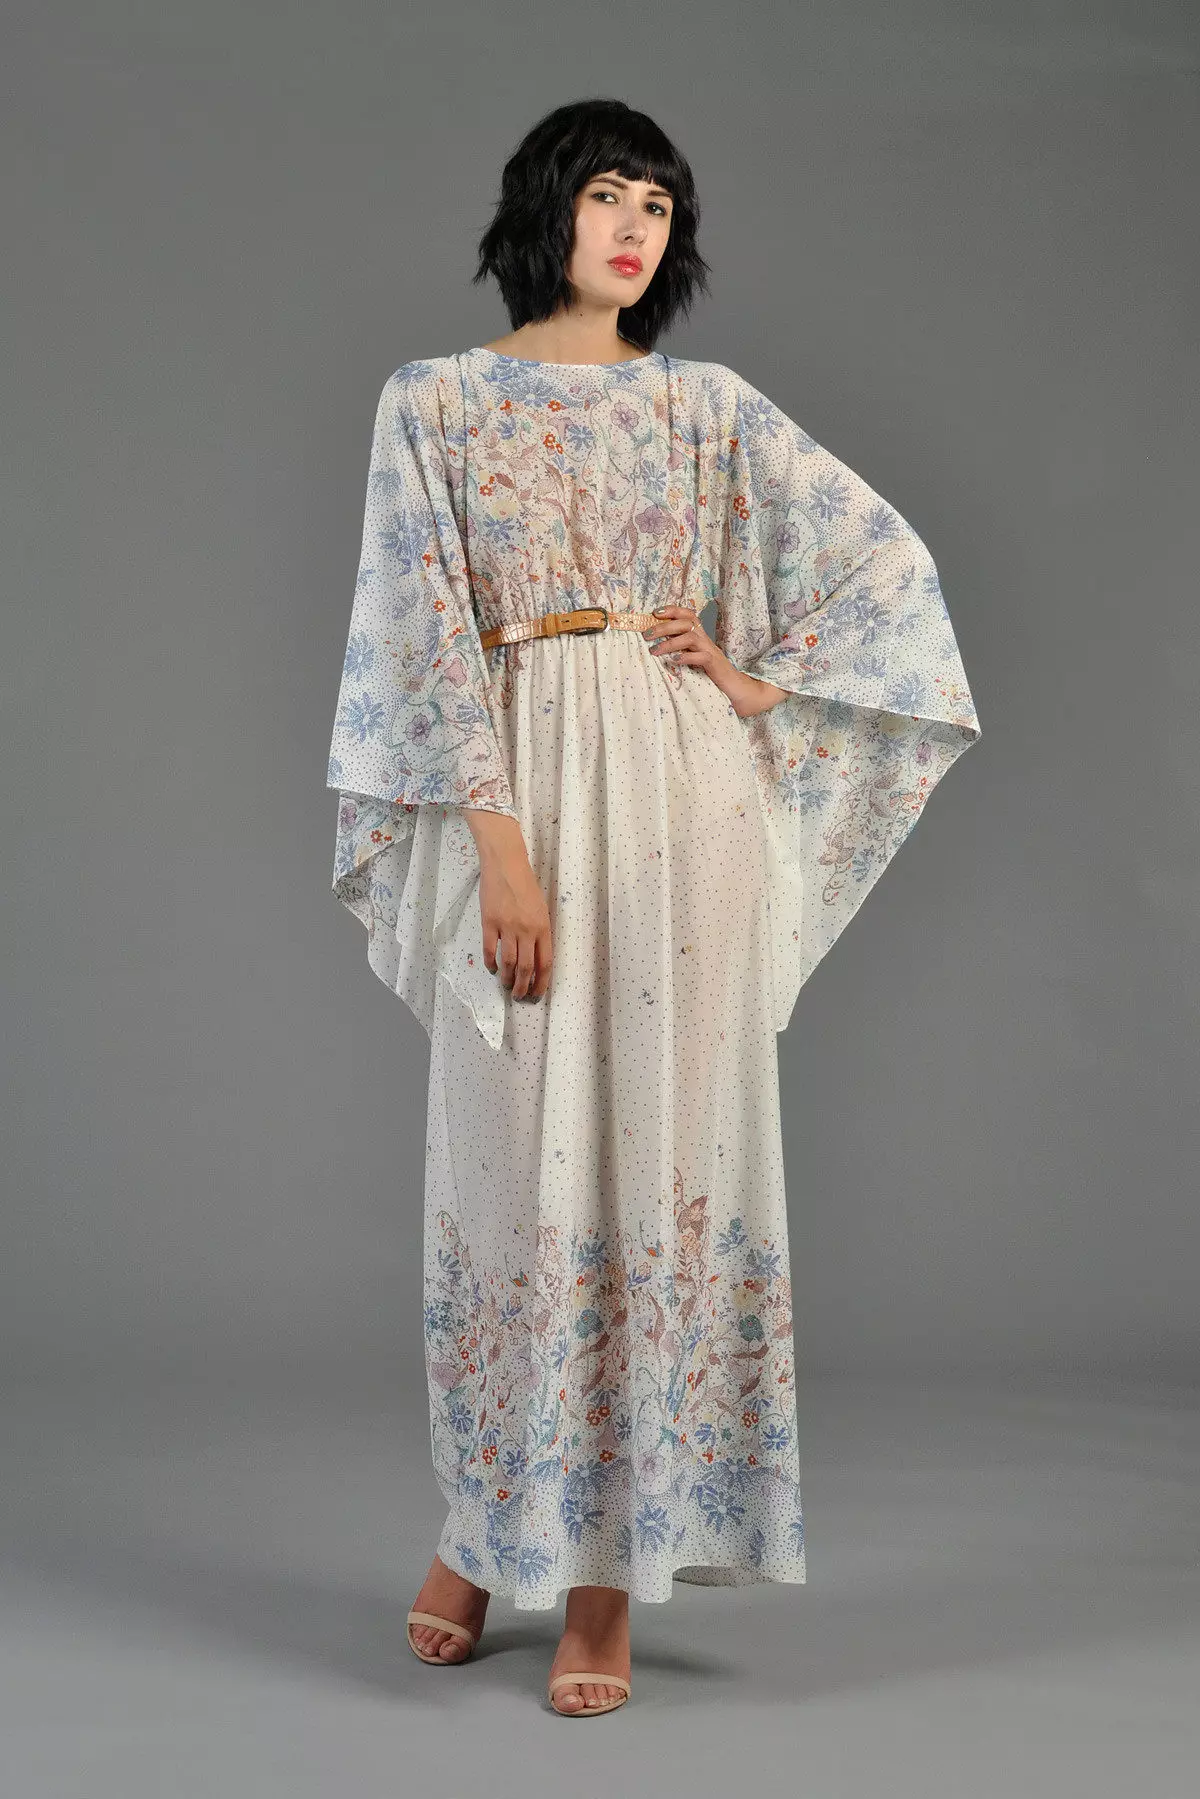 Summer Stoff fir Kimono Kleed